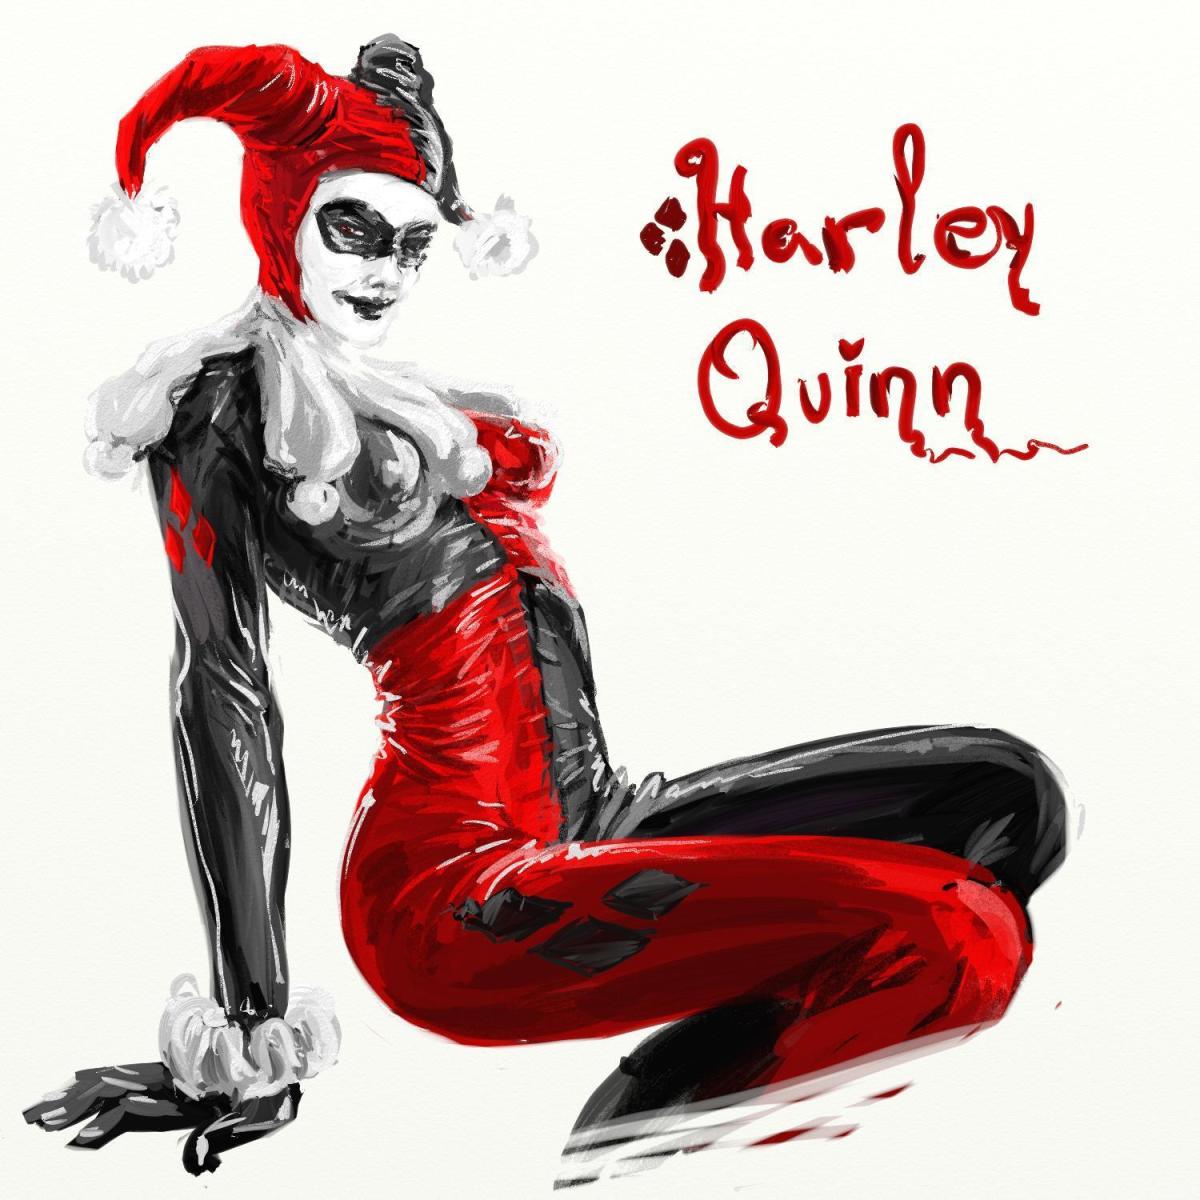 Here's Harley in the full half-black, half-red costume.